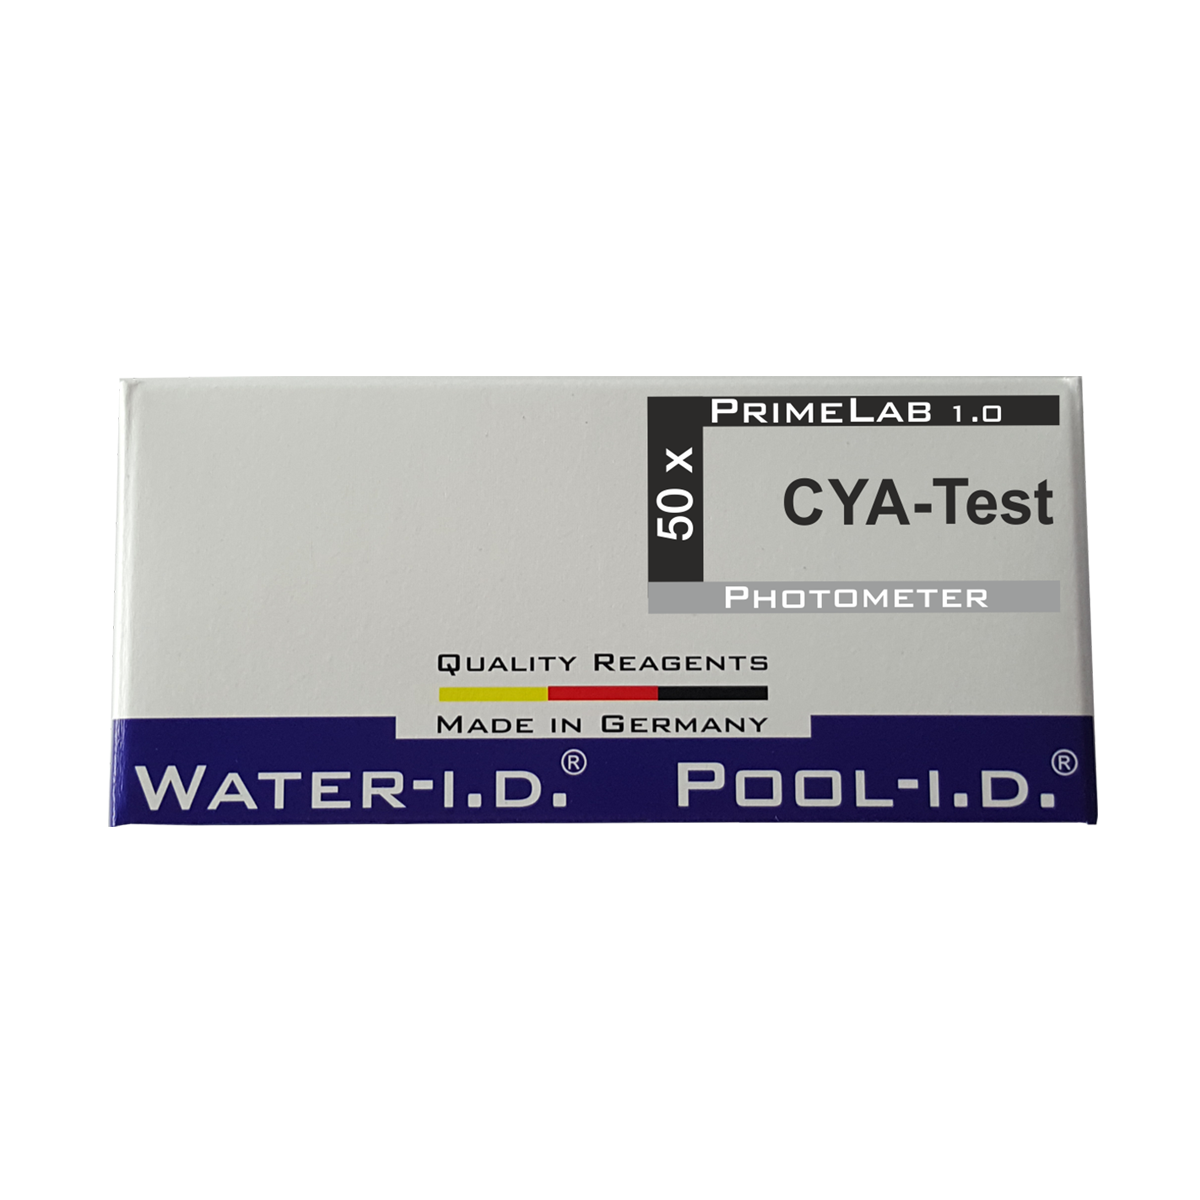 CYA-Test Cyanur ic Acid Tablets for Smart Pool Lab 1.0 Photometer, unit = 50 pcs. CYA-Test Cyanur ic Acid Tablets for Smart Pool Lab 1.0 Photometer, unit = 50 pcs.